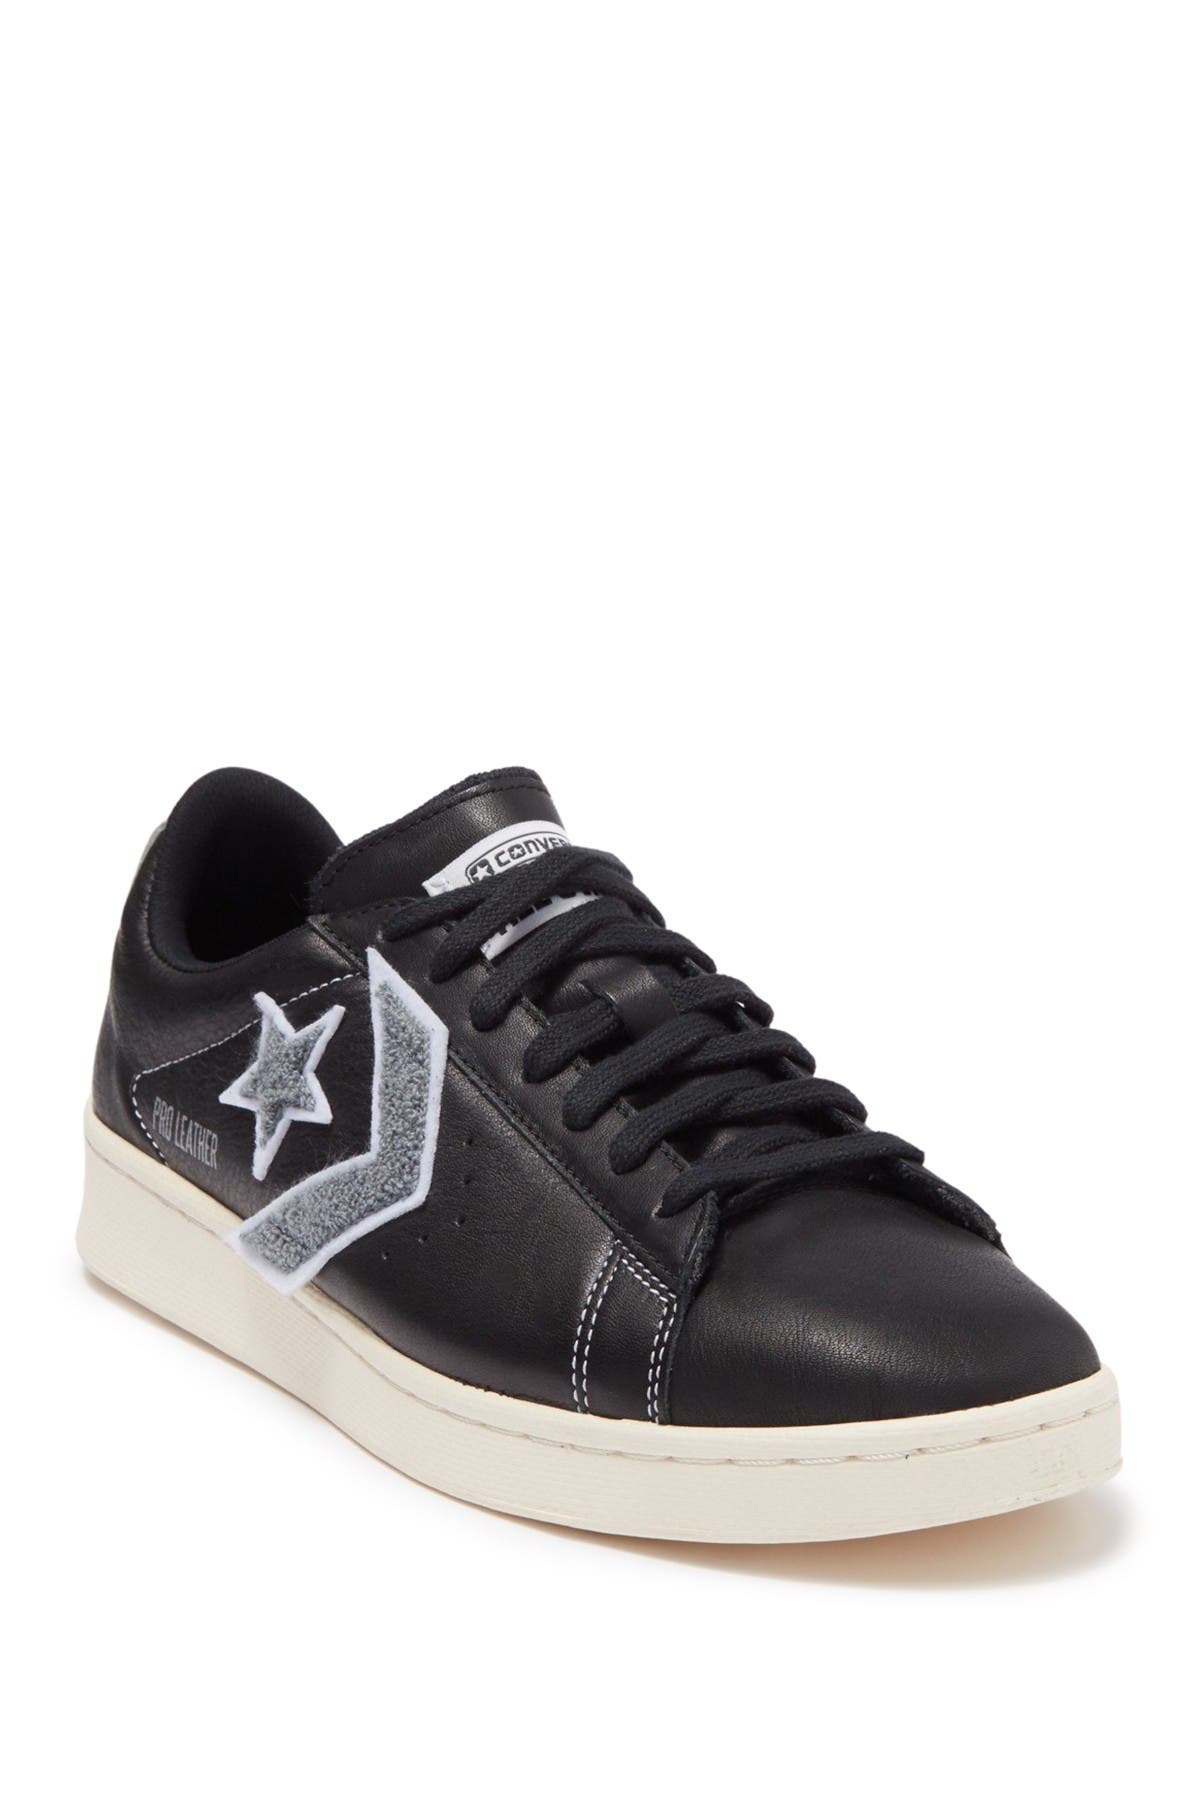 converse pro leather oxford sneaker